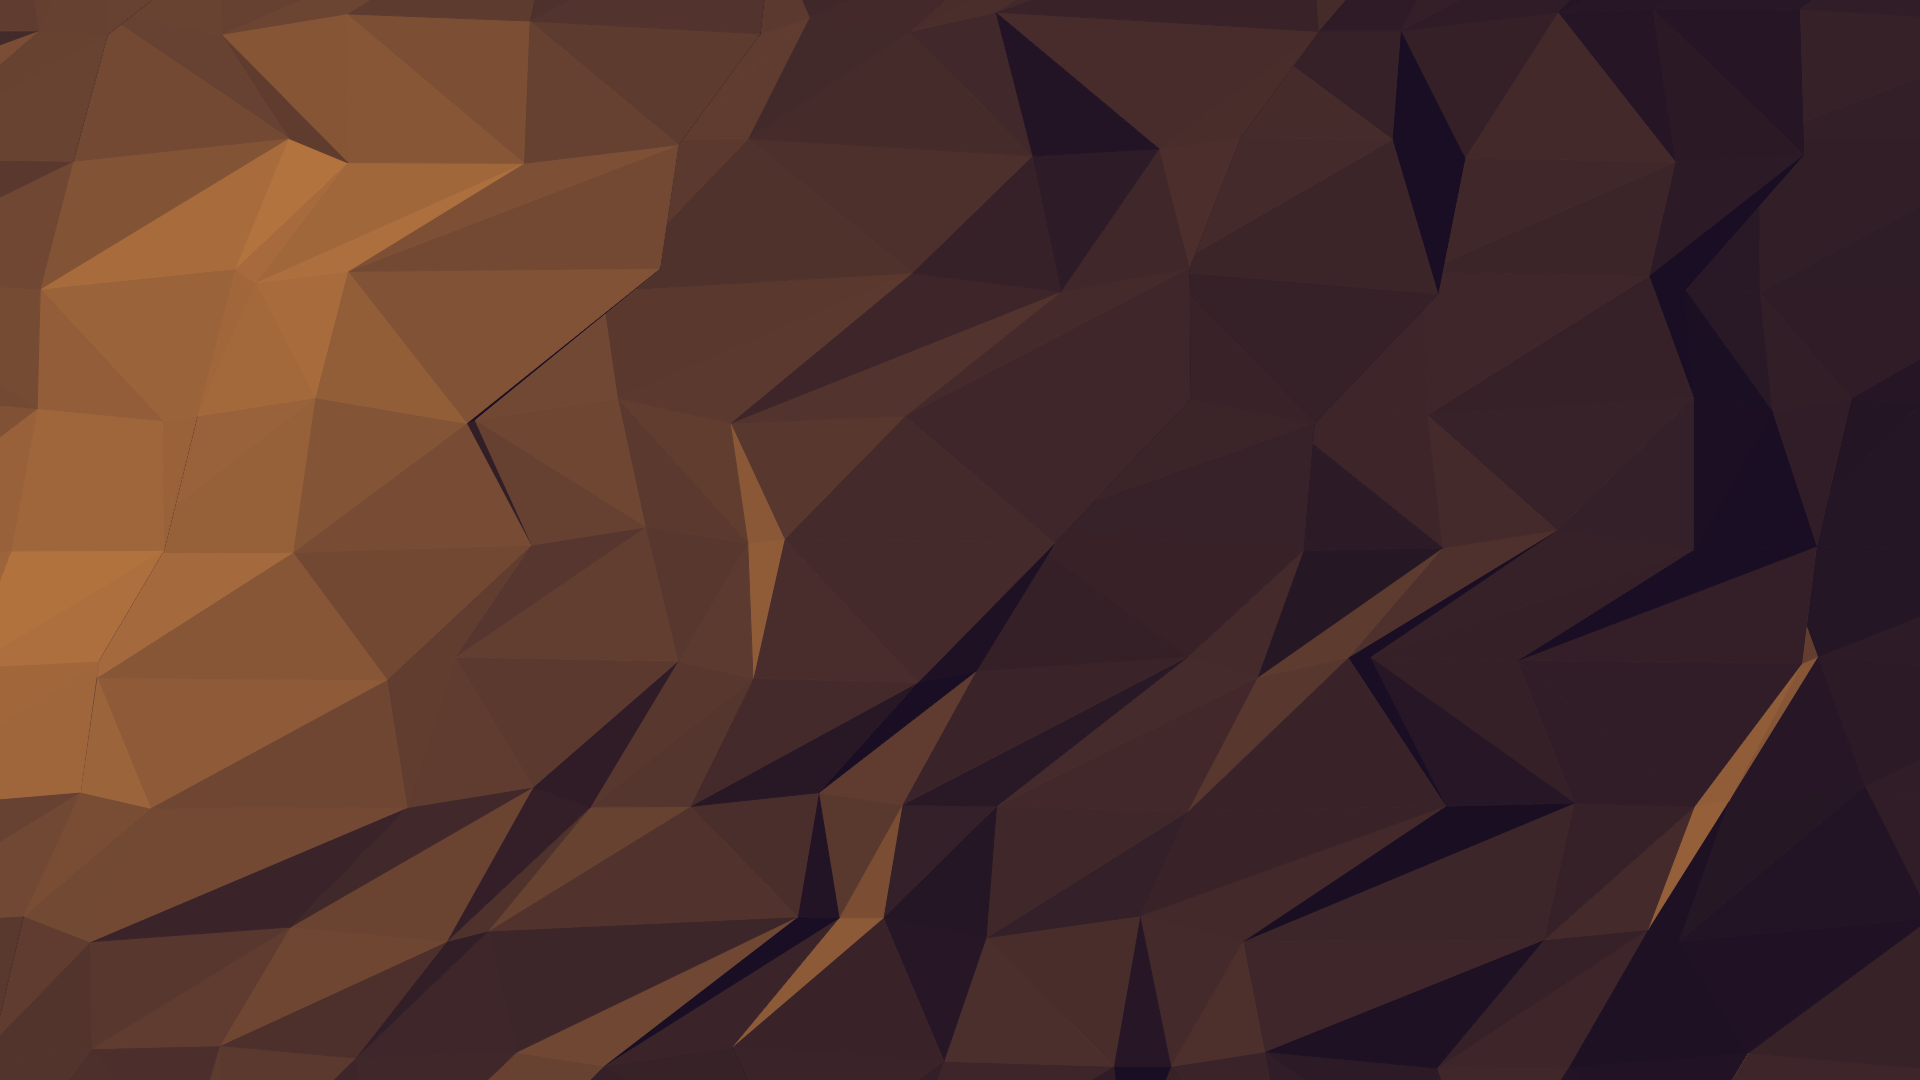 General 1920x1080 digital art low poly geometry minimalism triangle brown texture